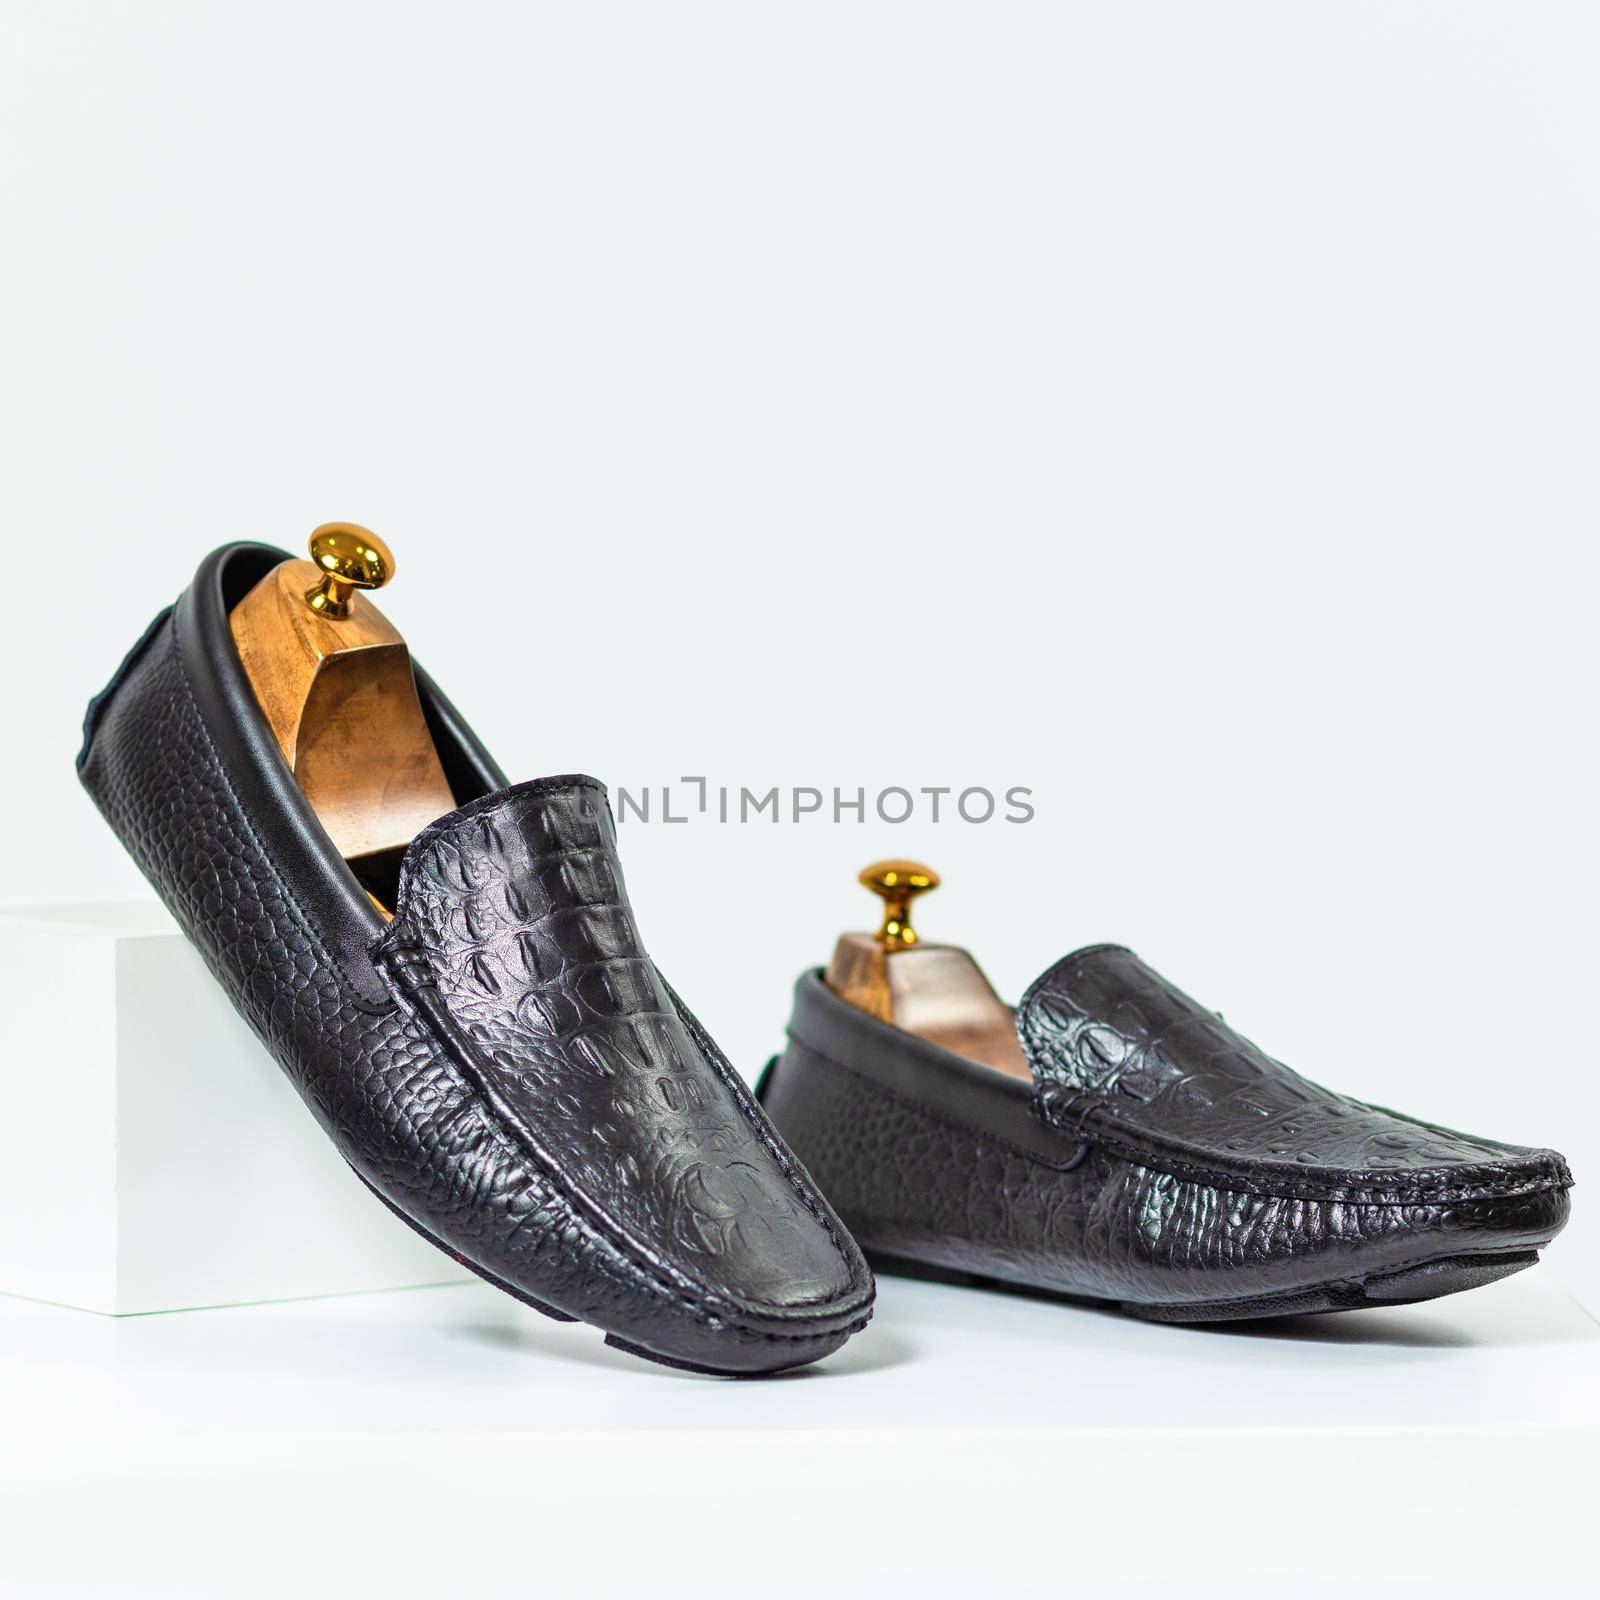 Men's classic black shoes close up by ferhad